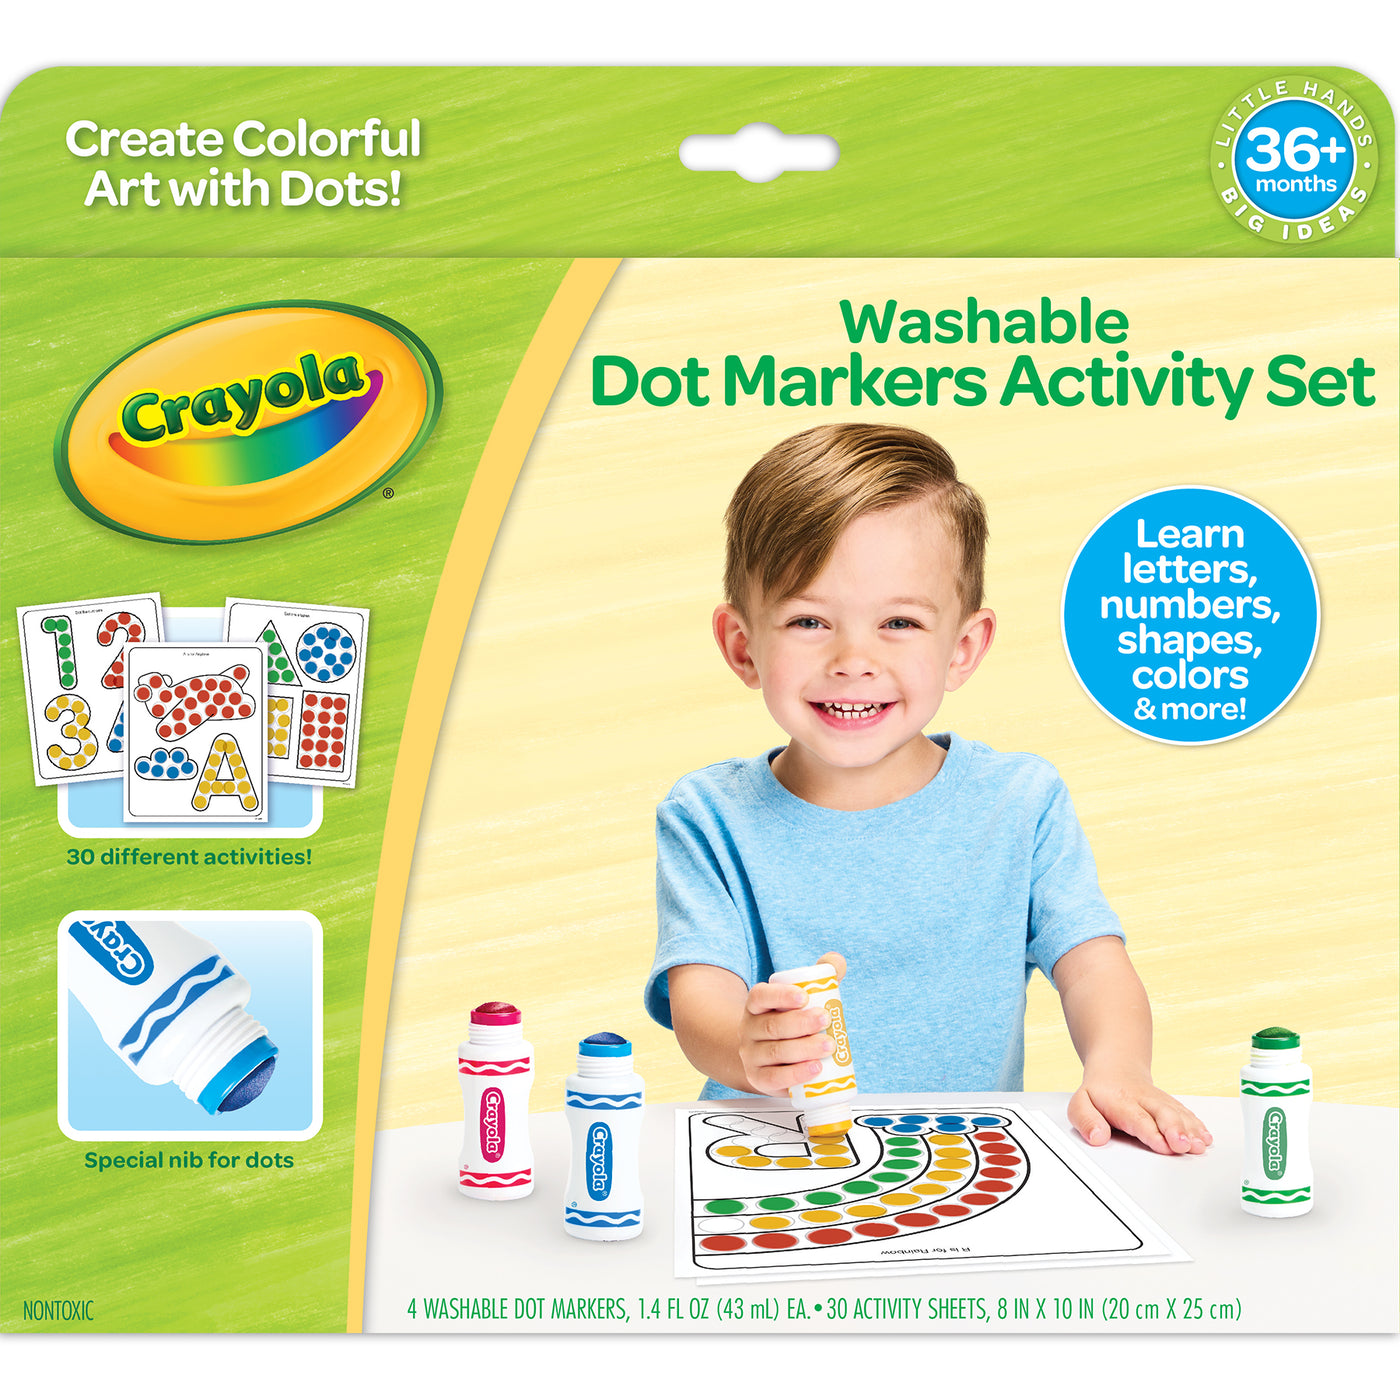 Washable Dot Markers Activity Set – Qualityucanafford